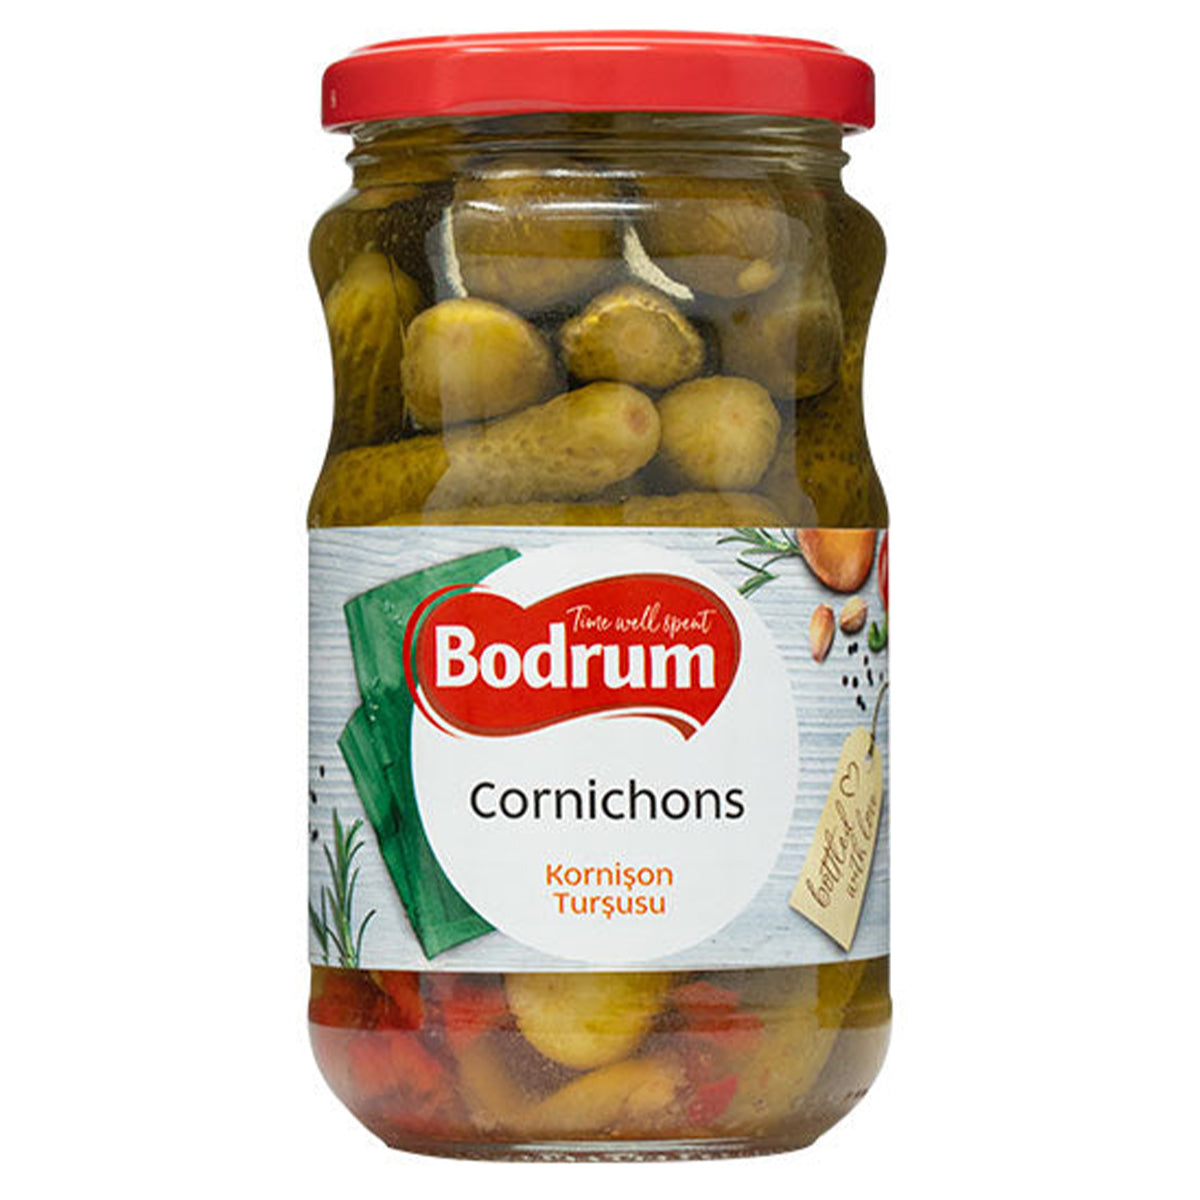 Bodrum - Cornichons - 680g - Continental Food Store